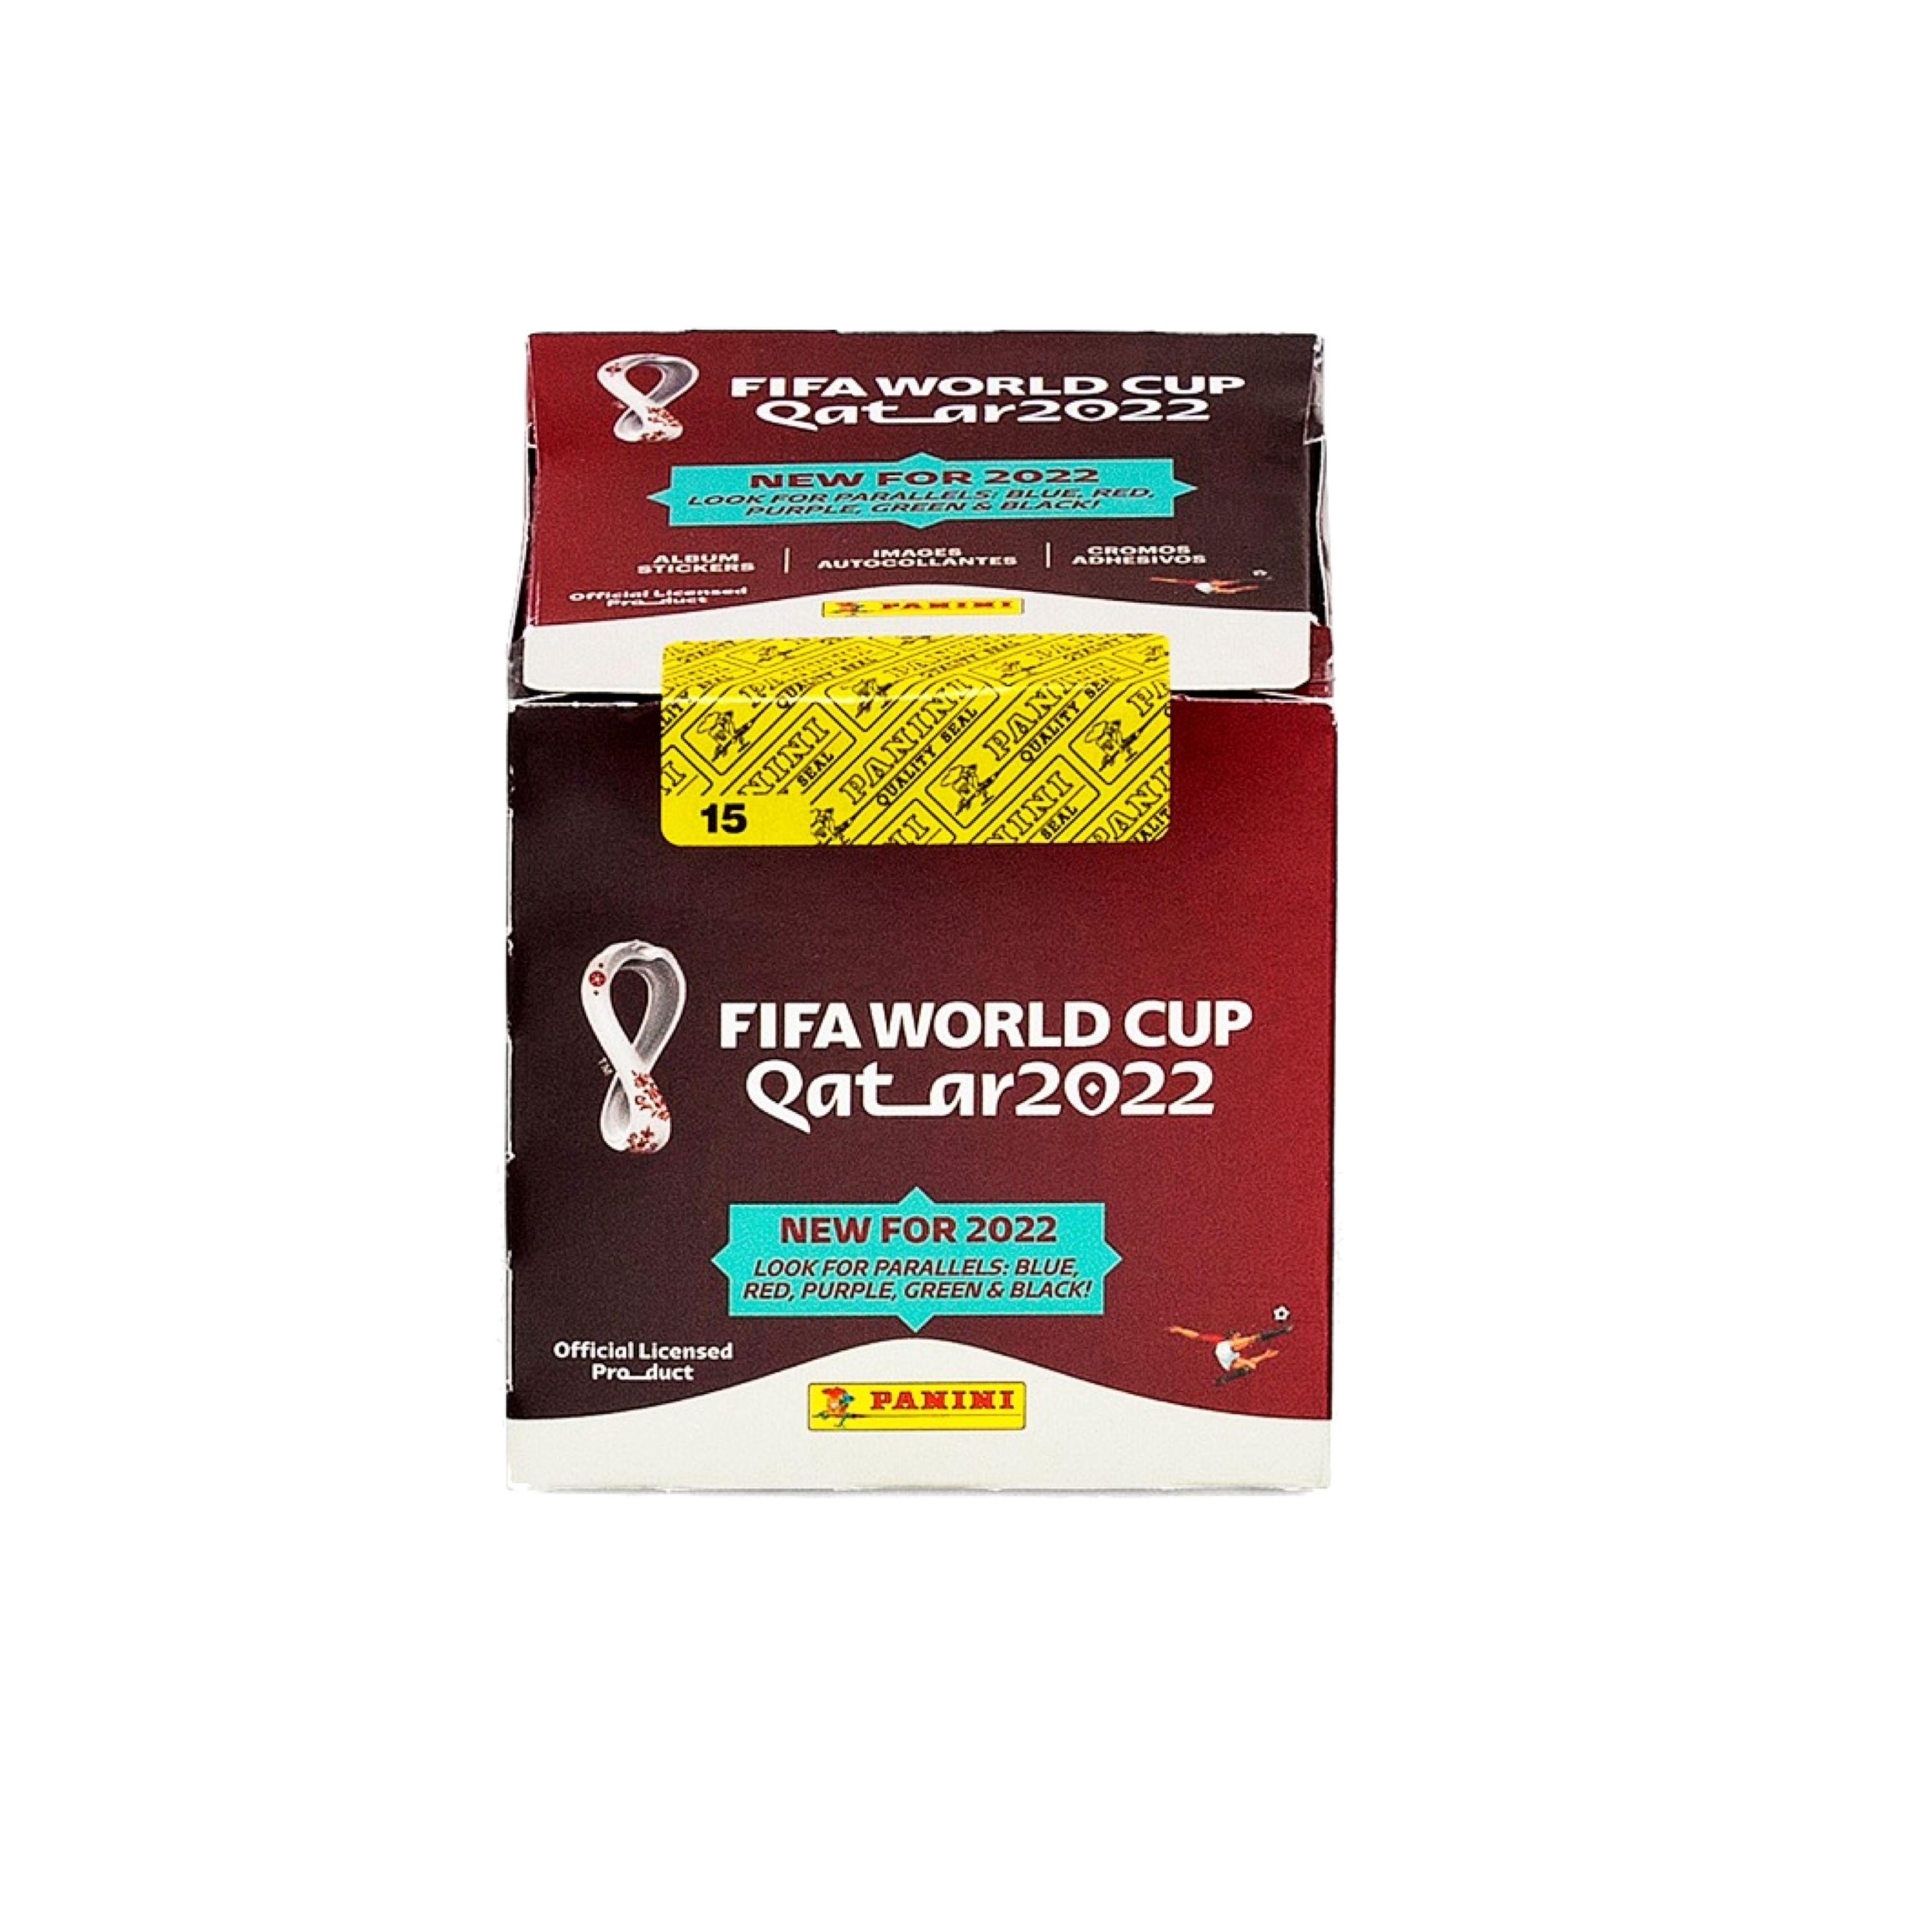 world cup box